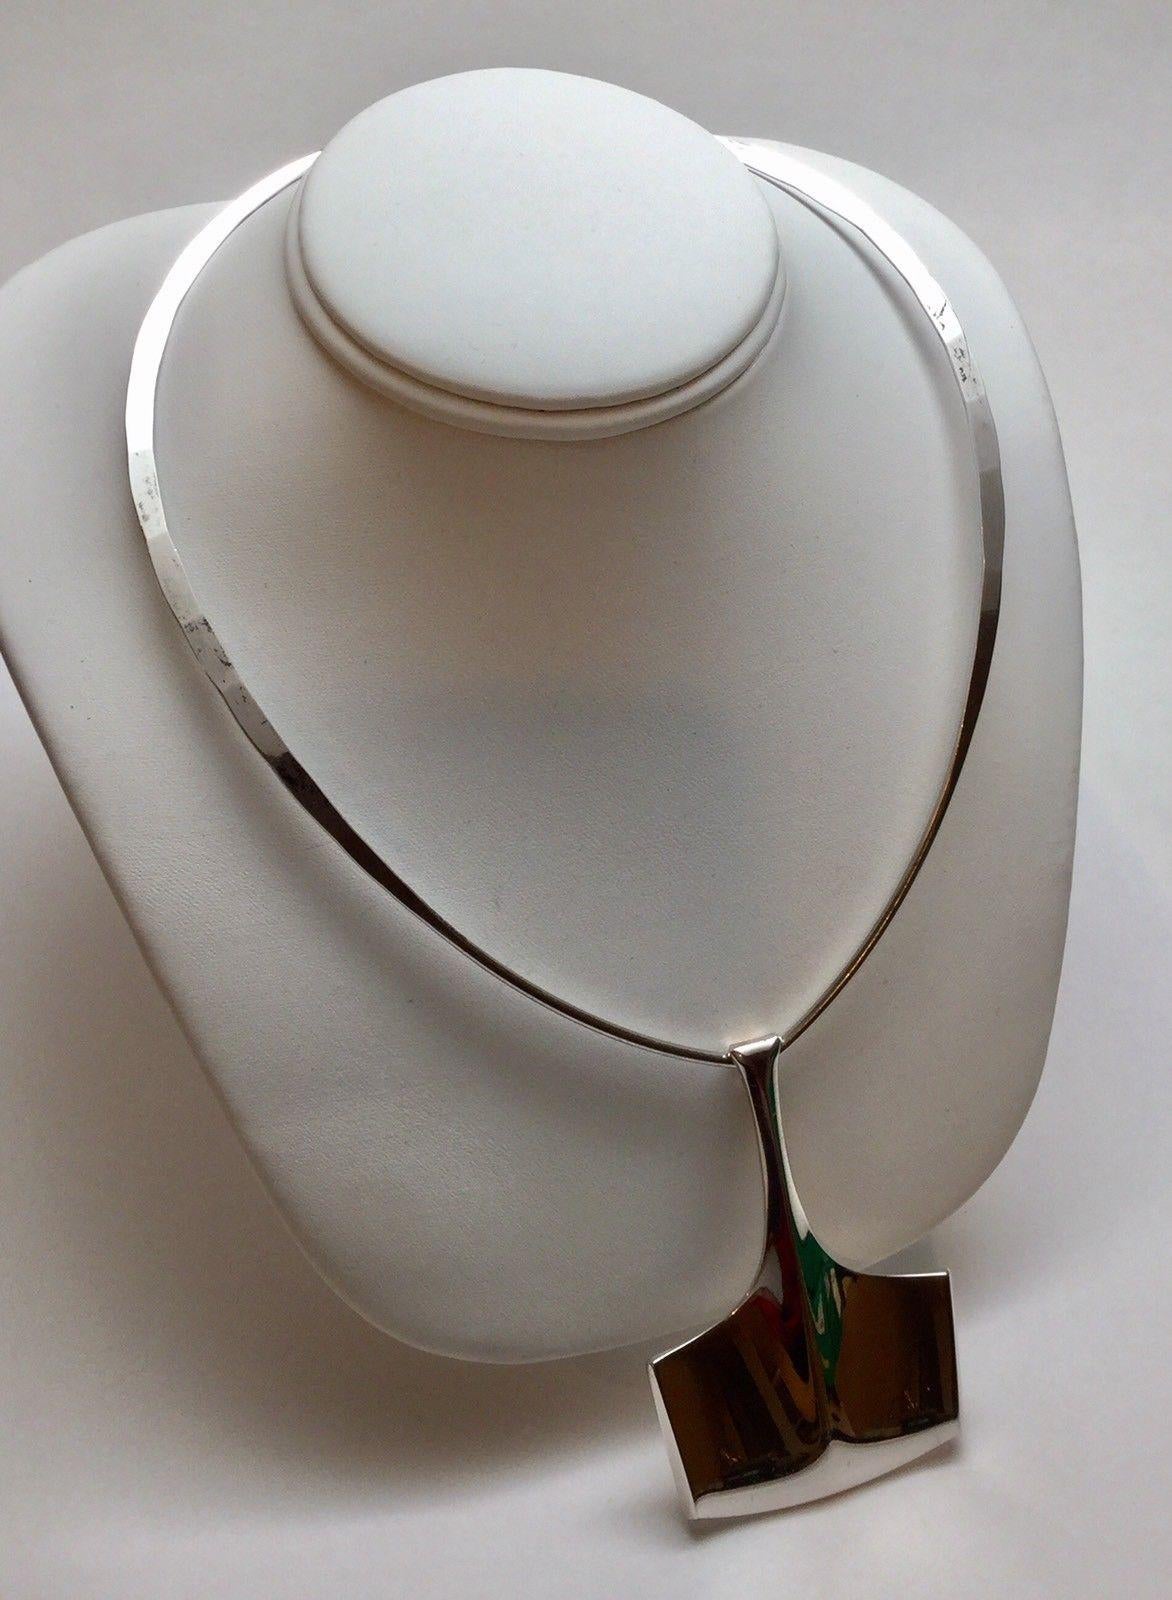 Vintage Bjorn Sigurd Ostern for David-Andersen Norway sterling silver Thor's Hammer pendant on David-Andersen hammered sterling silver collar necklace.

c. 1960's

Pendant: 
Marked - DAVID ANDERSEN NORWAY STERLING 925S, INV.B.S.O. for Bjorn Sigurd